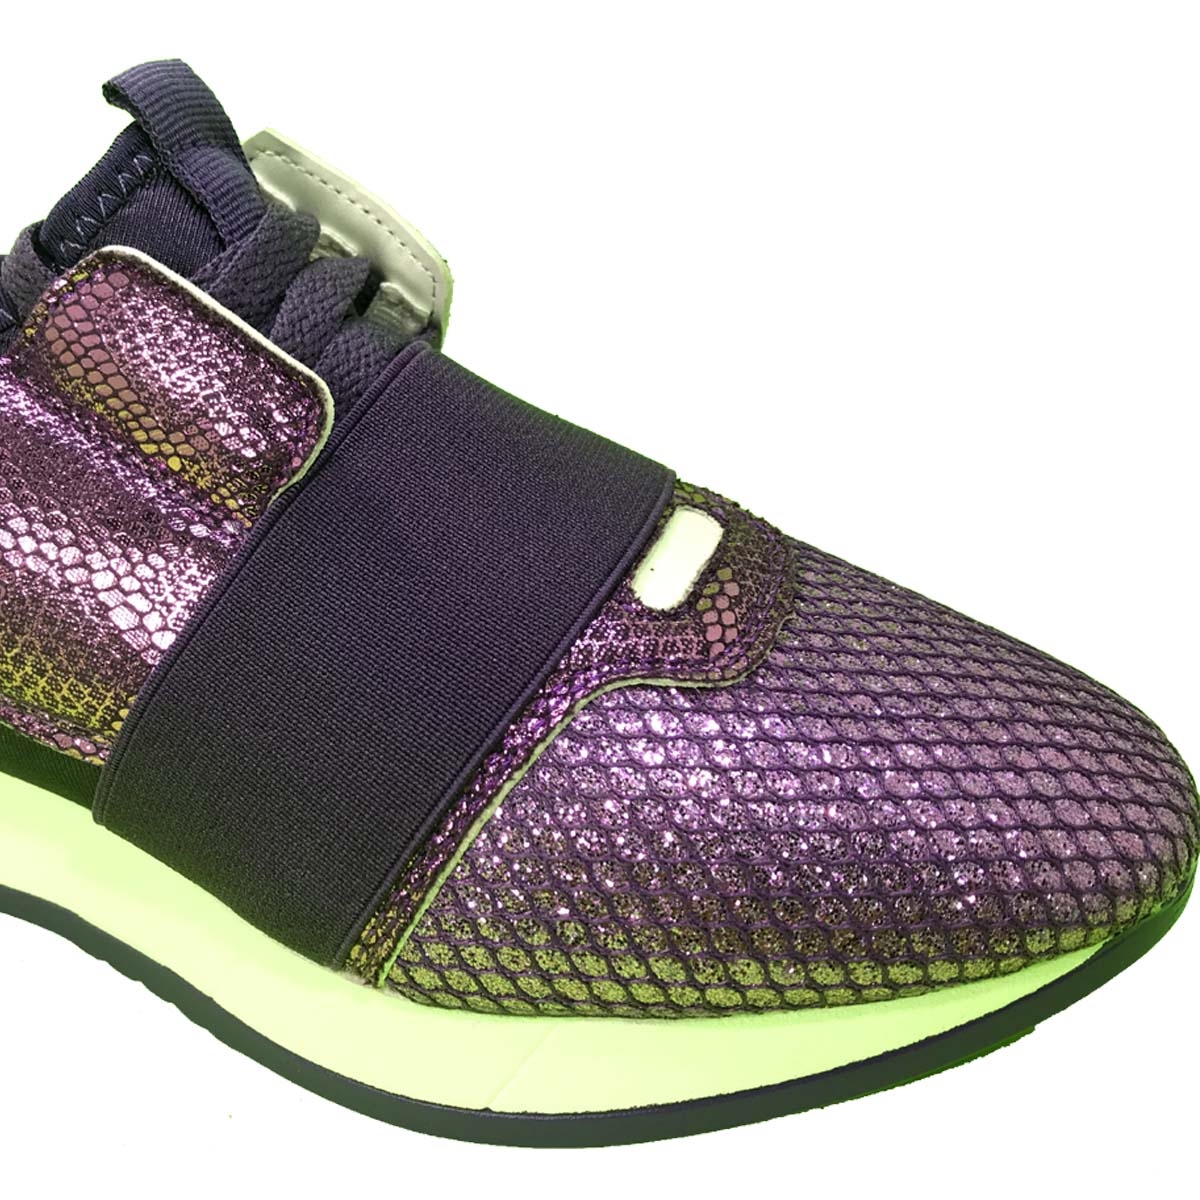 purple shiny shoes